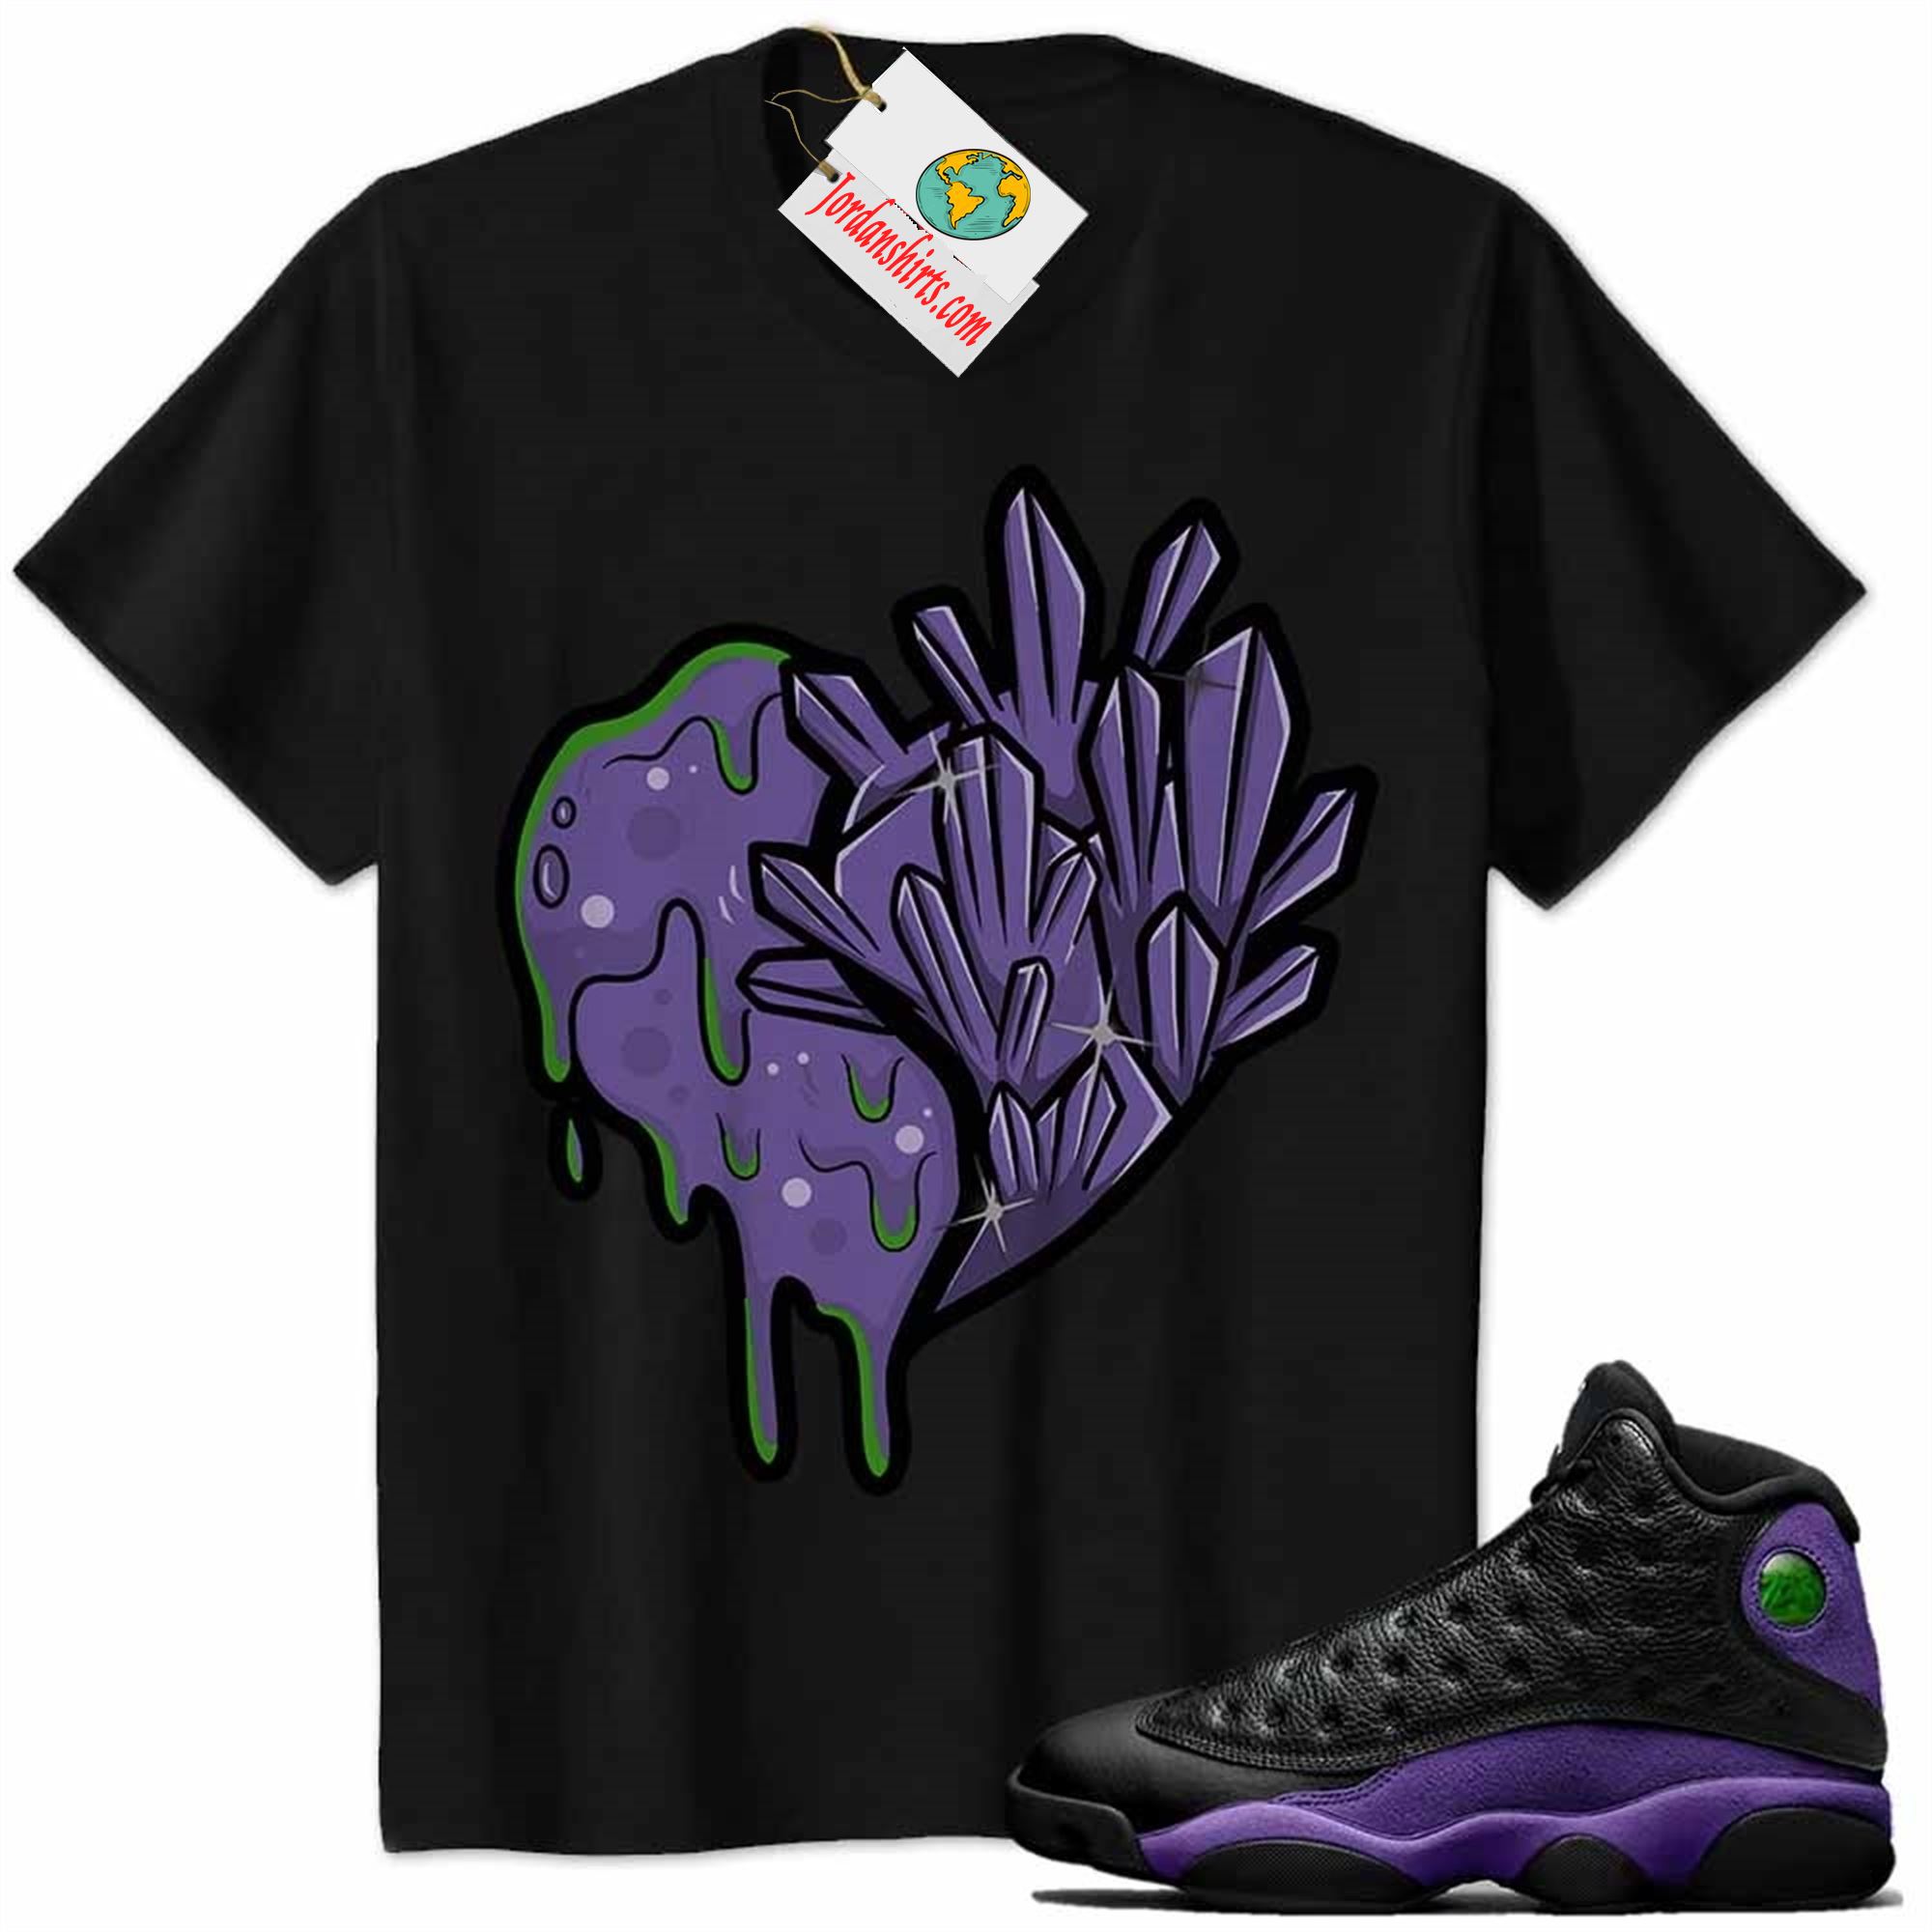 Jordan 13 Shirt, Crystal And Melt Heart Black Air Jordan 13 Court Purple 13s Size Up To 5xl